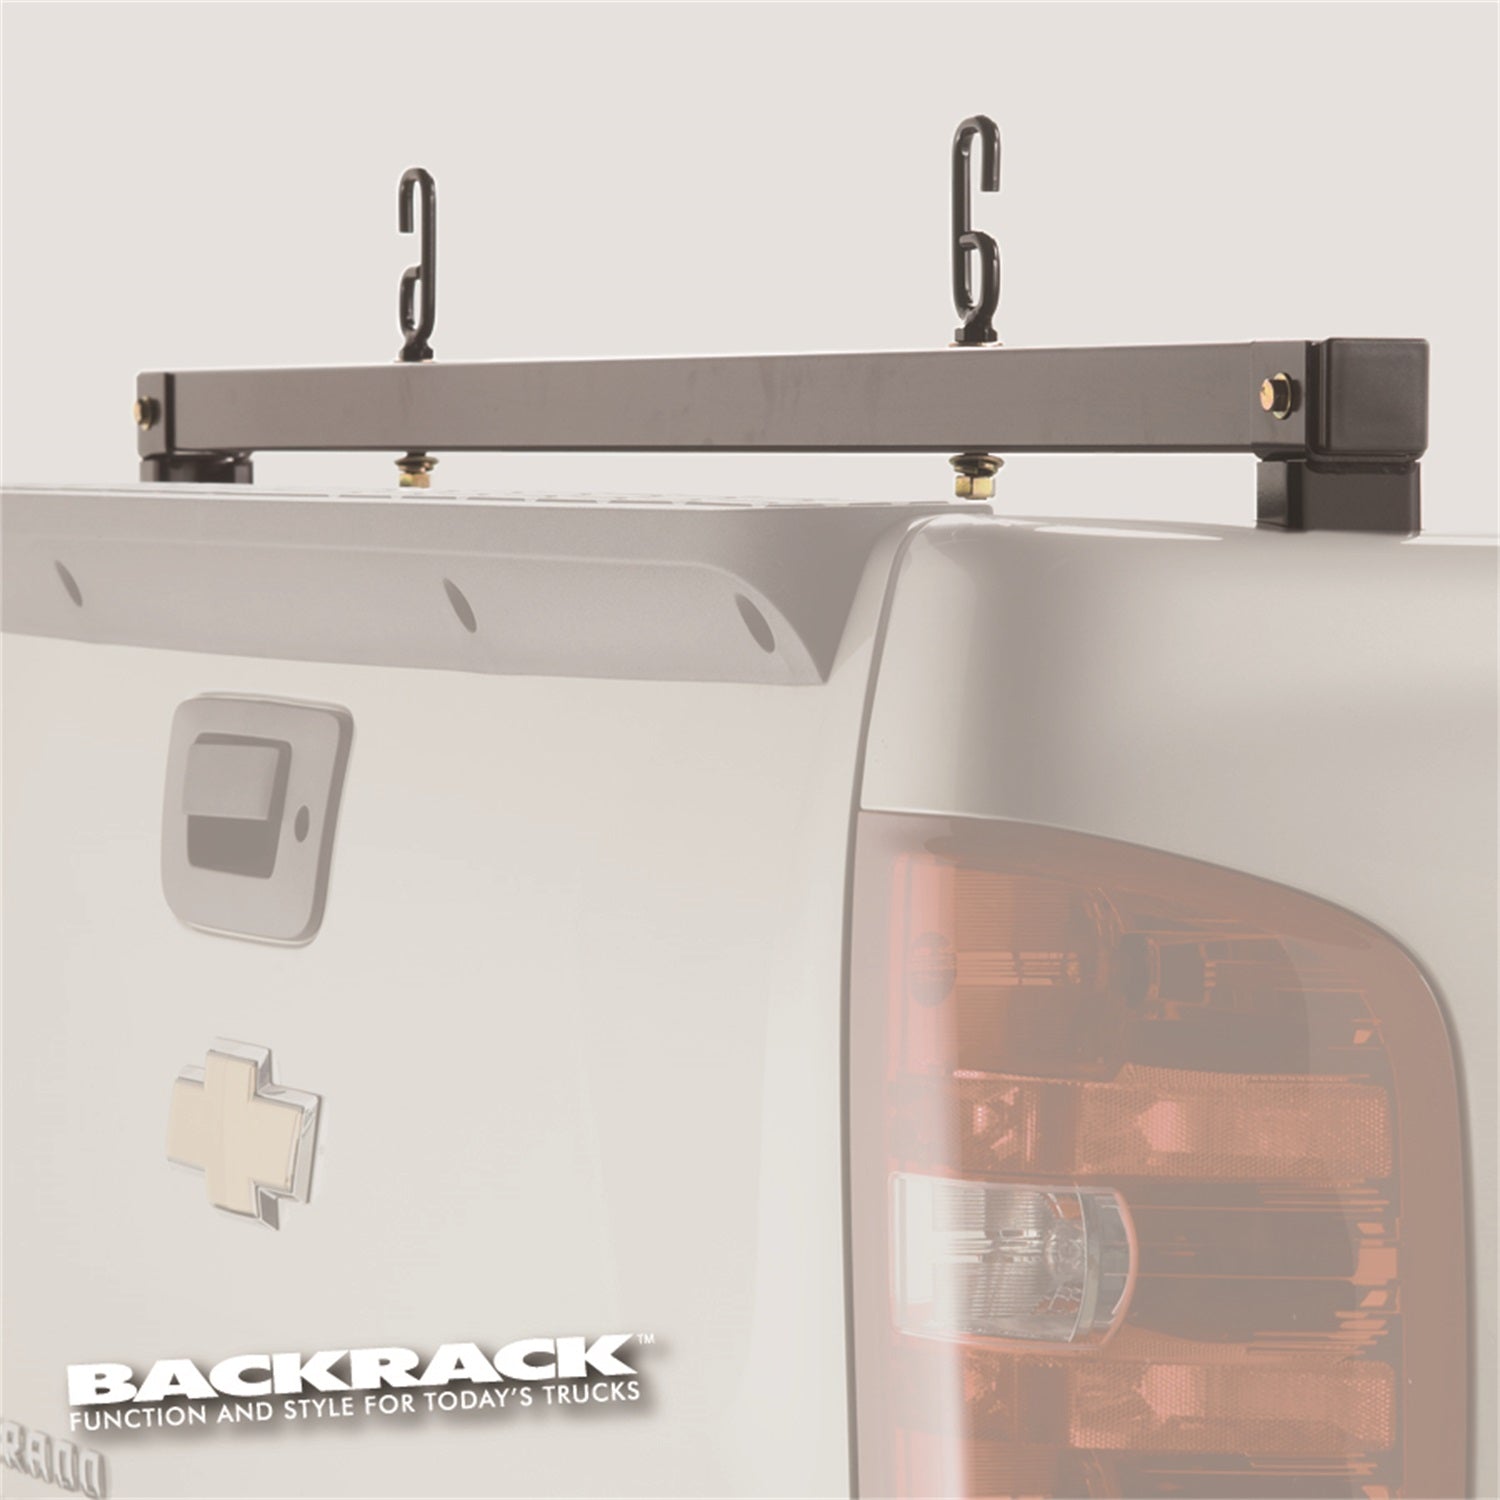 Backrack 11527 Truck Bed Rear Bar Fits 1500 1500 Classic 2500 3500 Ram 1500